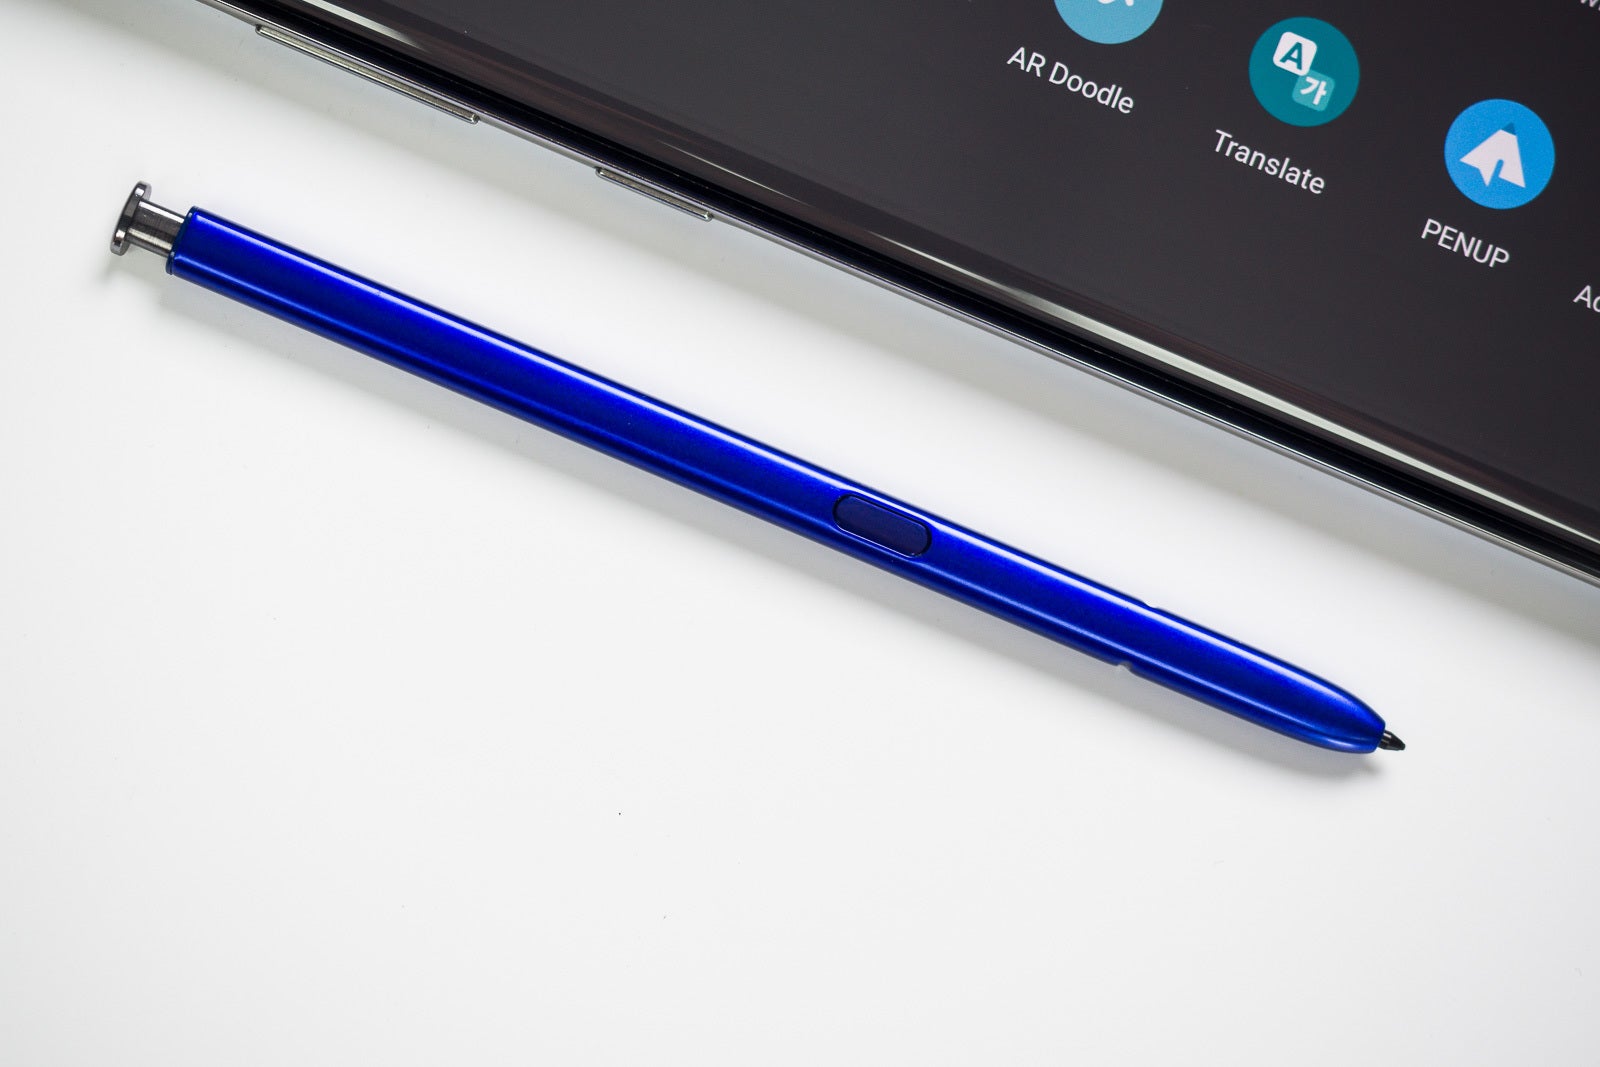 Samsung S Pen Note 8